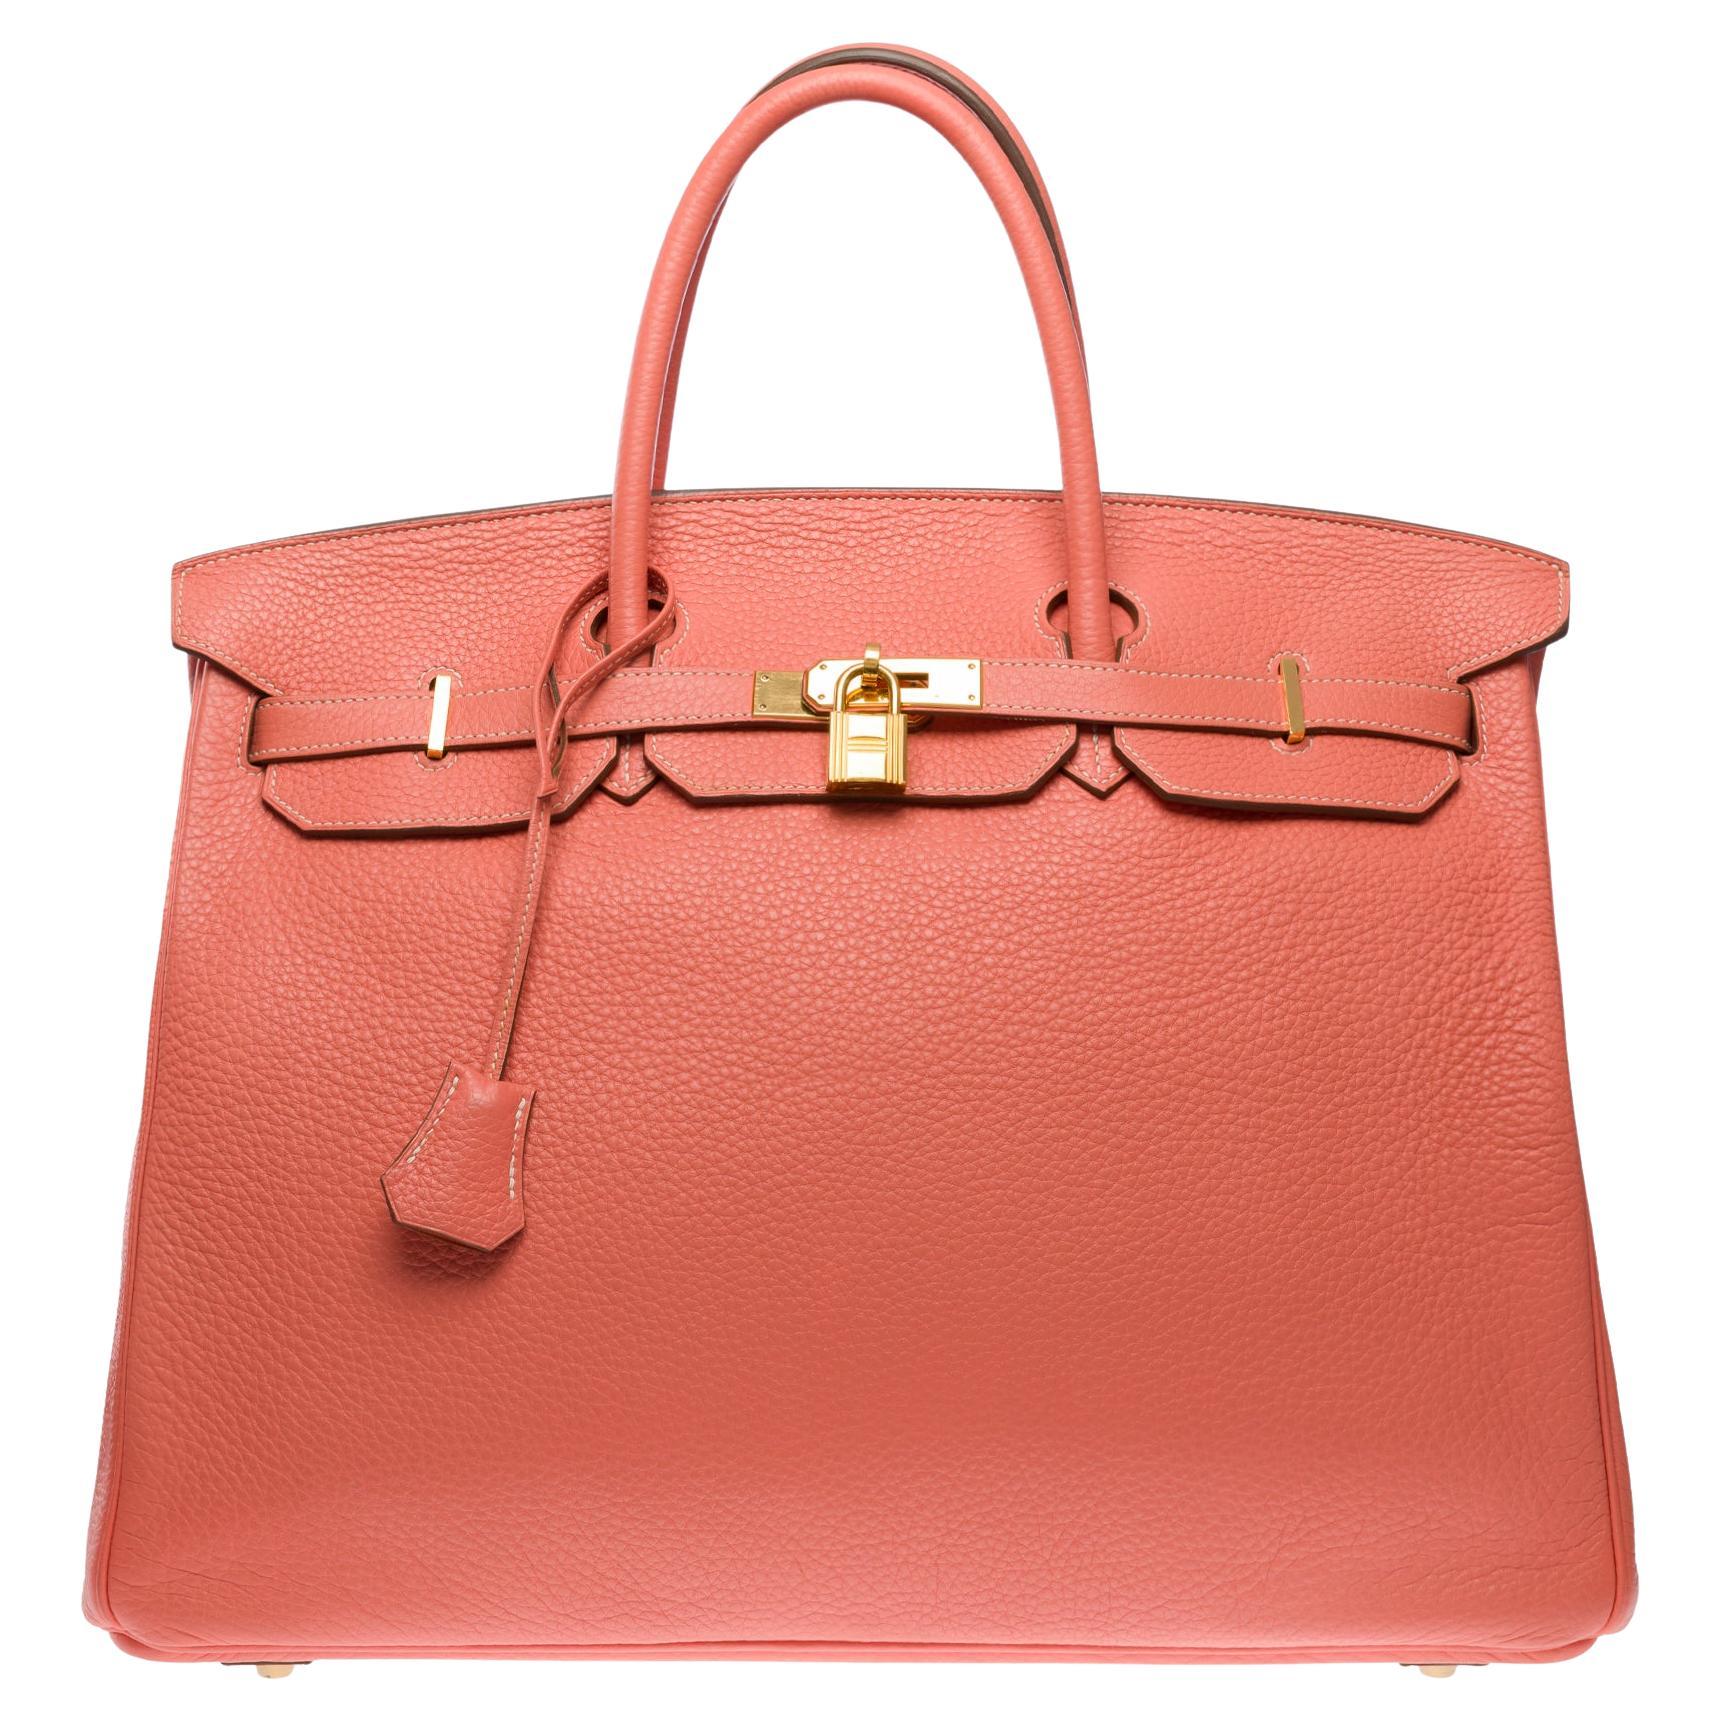 Stunning Hermes Birkin 40cm handbag in Rose Tea Togo leather, GHW